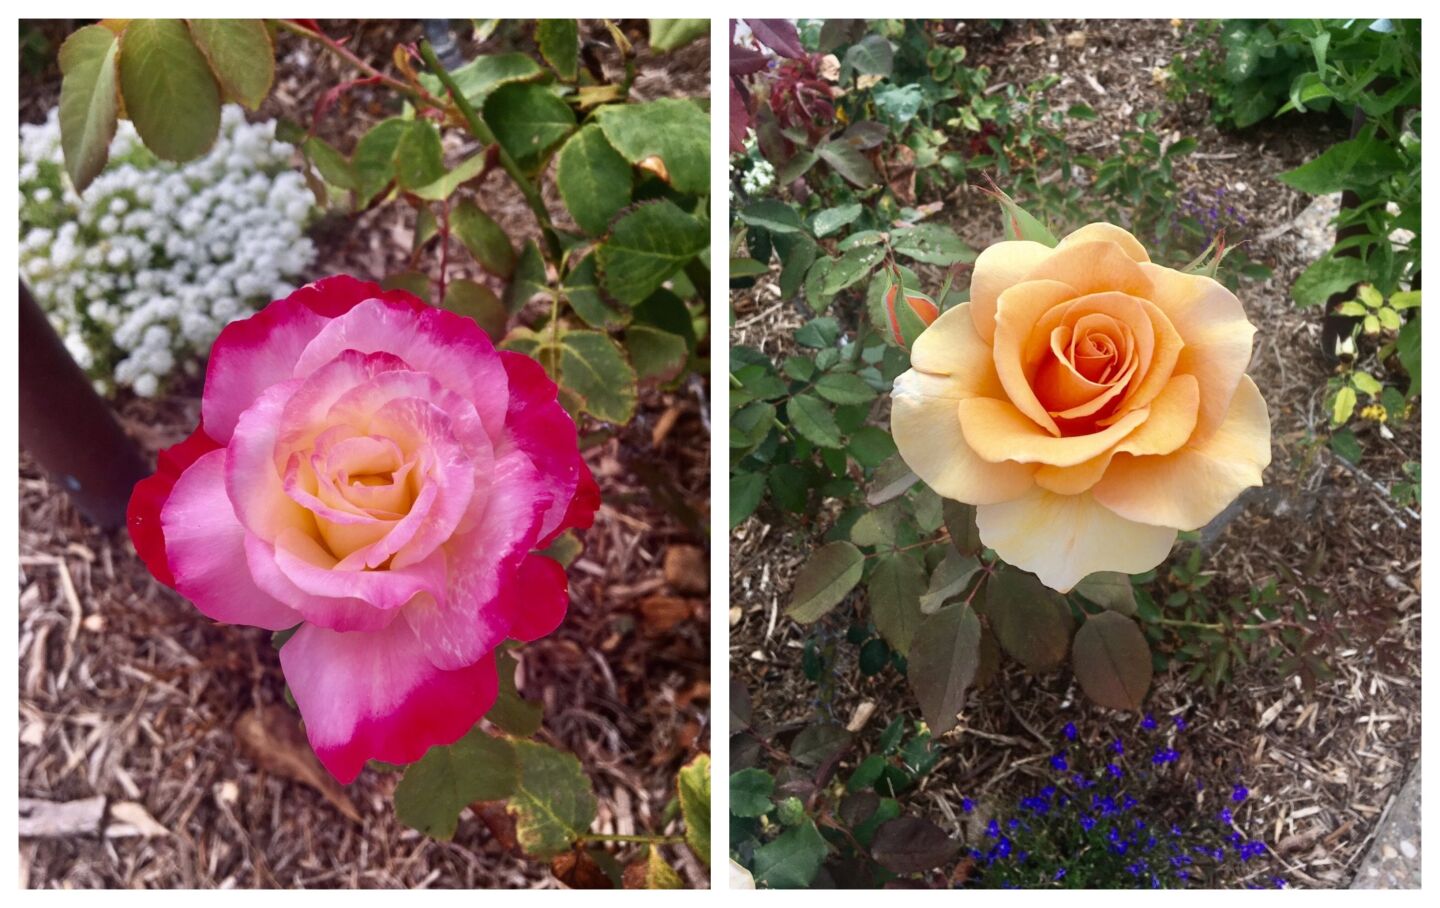 A sampling of roses along El Paseo Grande in La Jolla Shores.